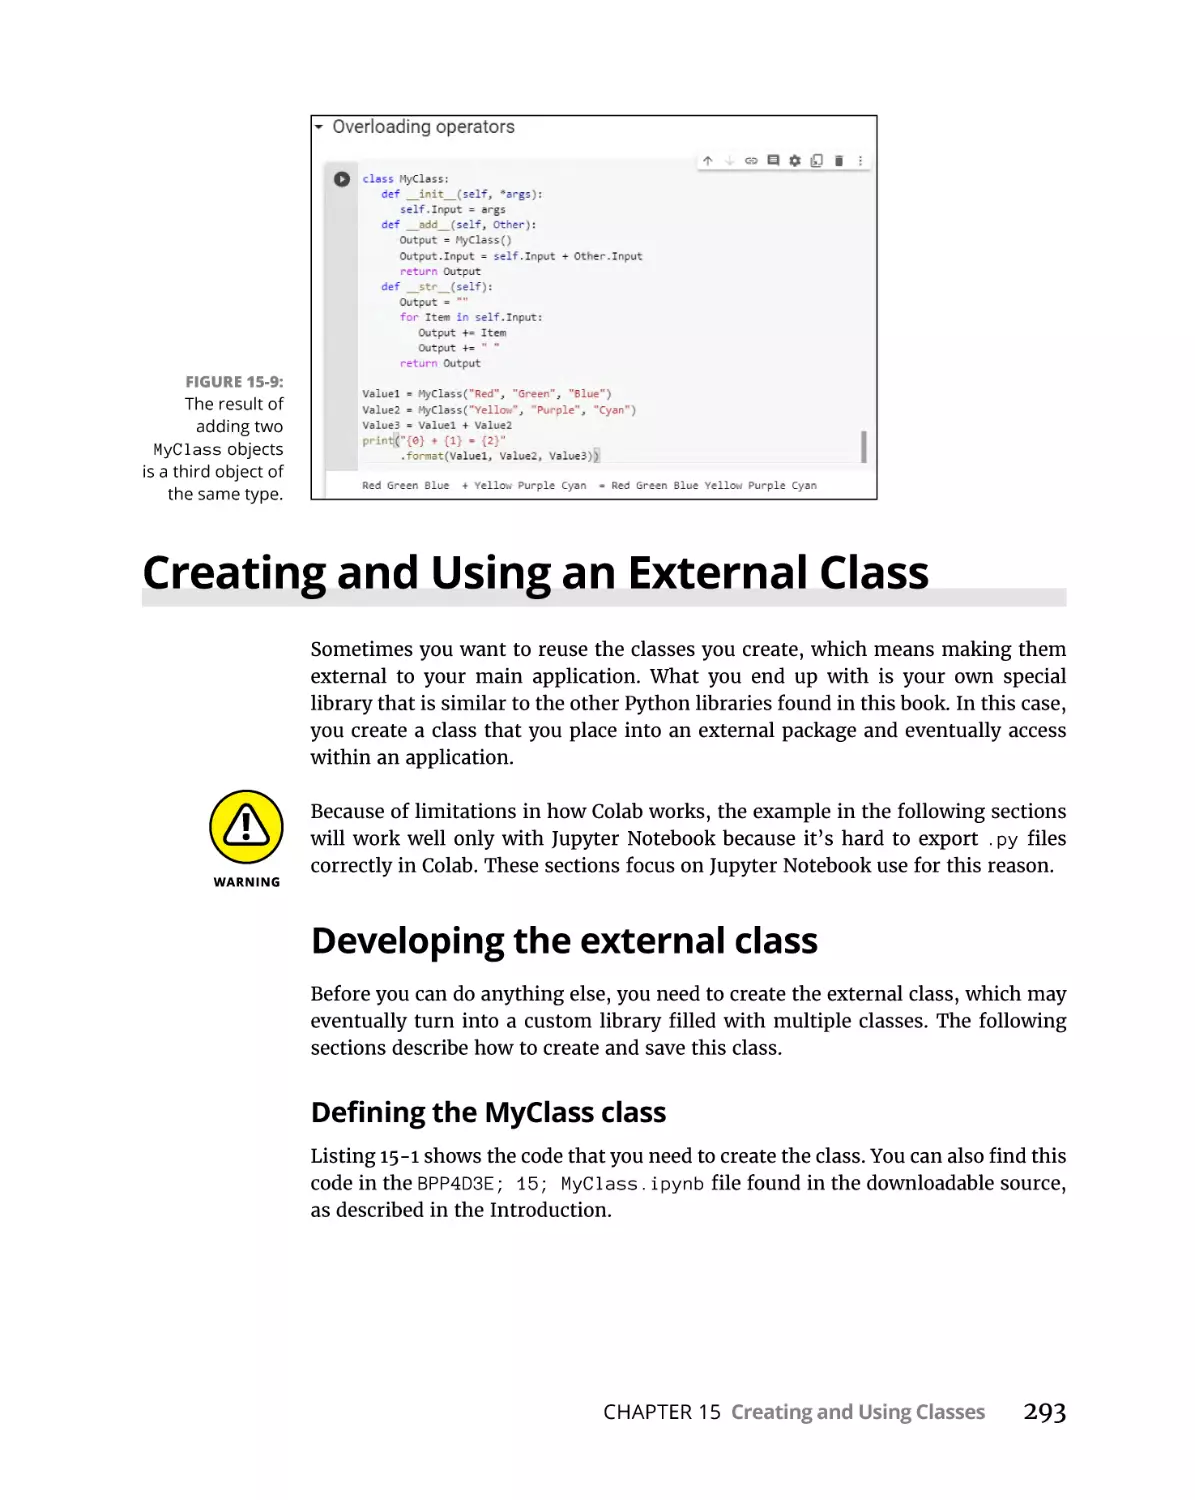 Creating and Using an External Class
Developing the external class
Defining the MyClass class